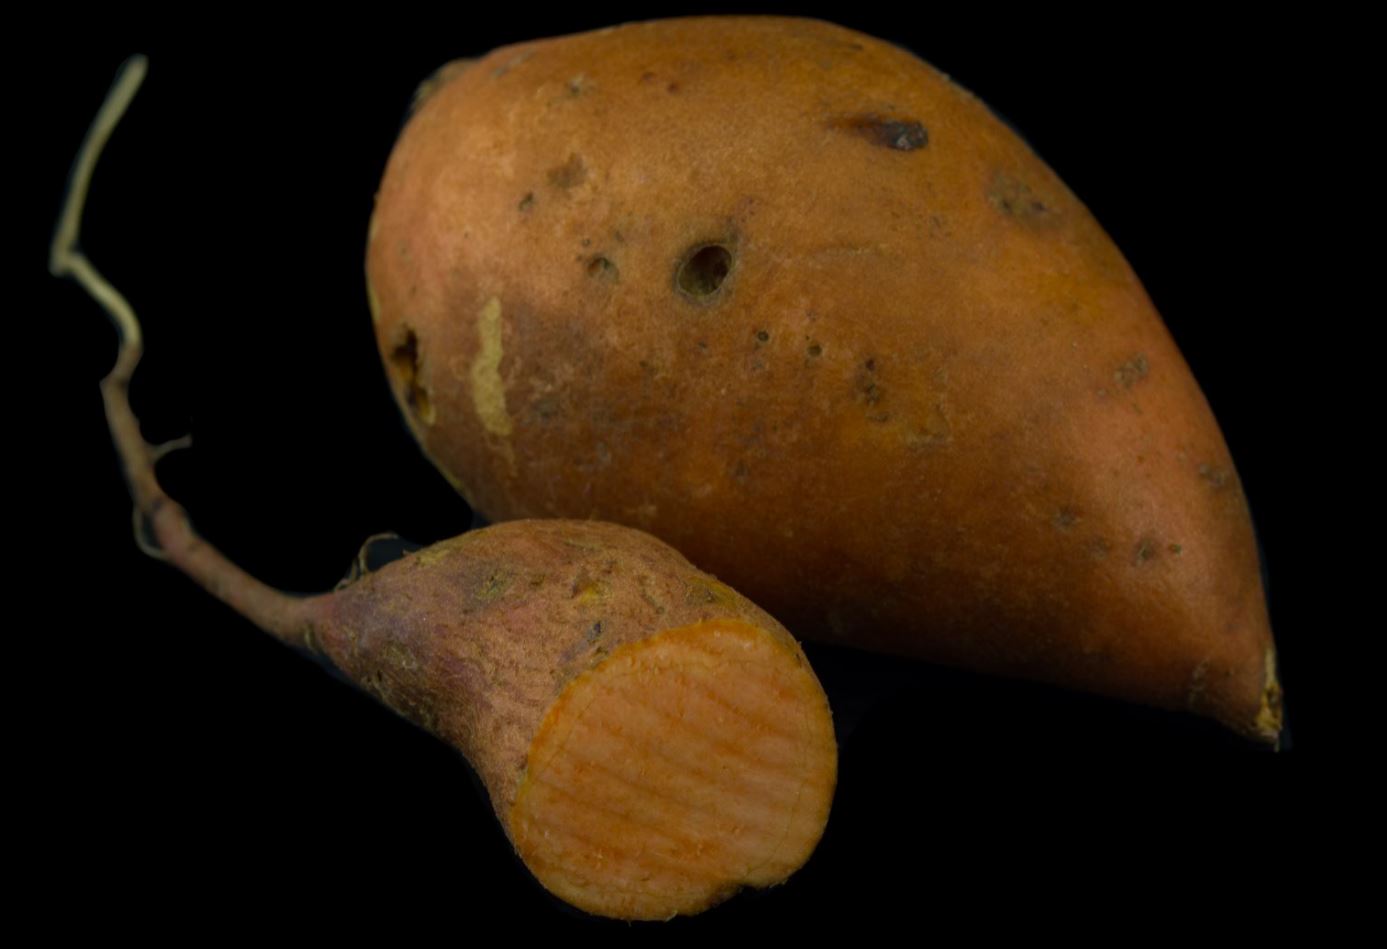 Variedade de Polpa Alaranjada (Ipomoea batatas)